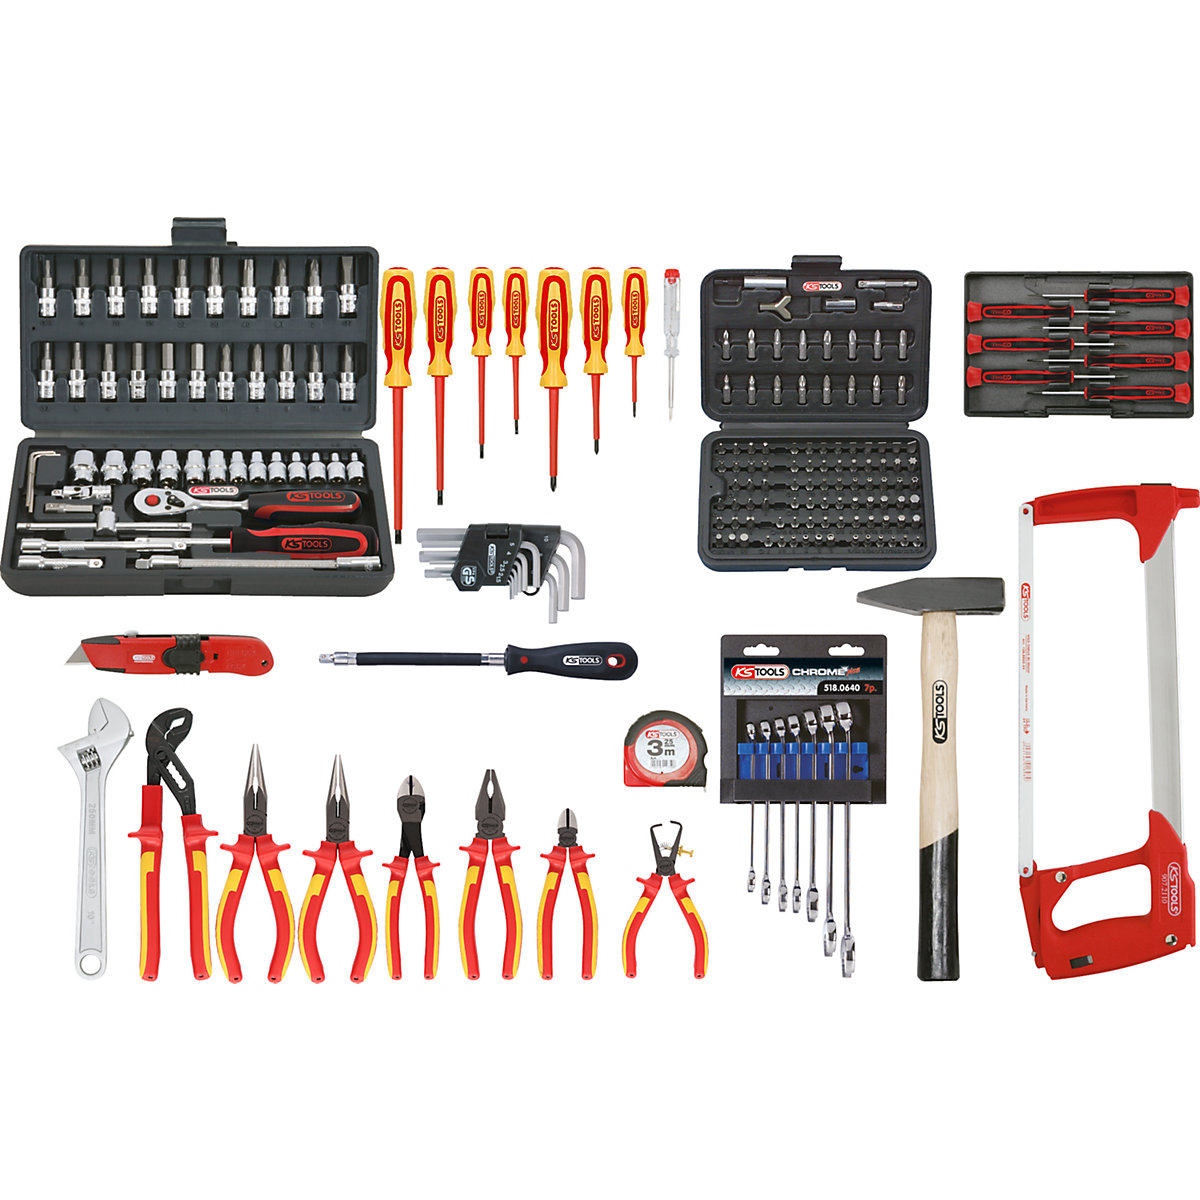 Premium electrician's max tool kit - KS Tools